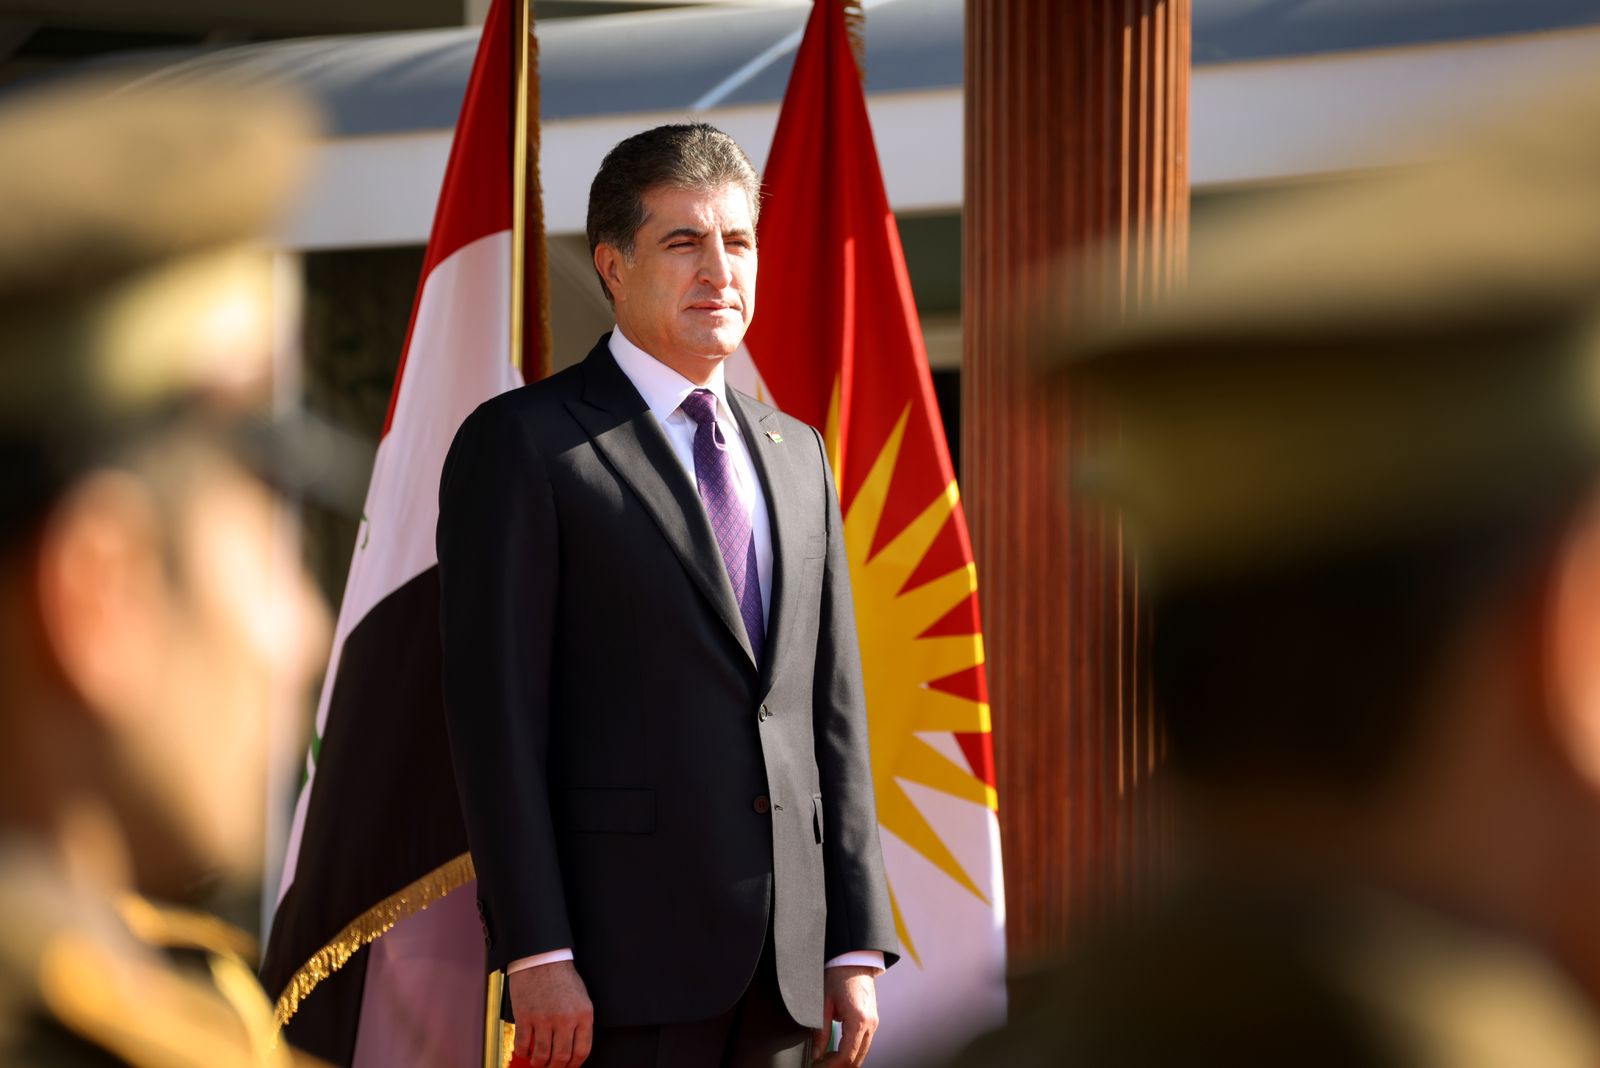 The President of Kurdistan Region arrives in Baghdad